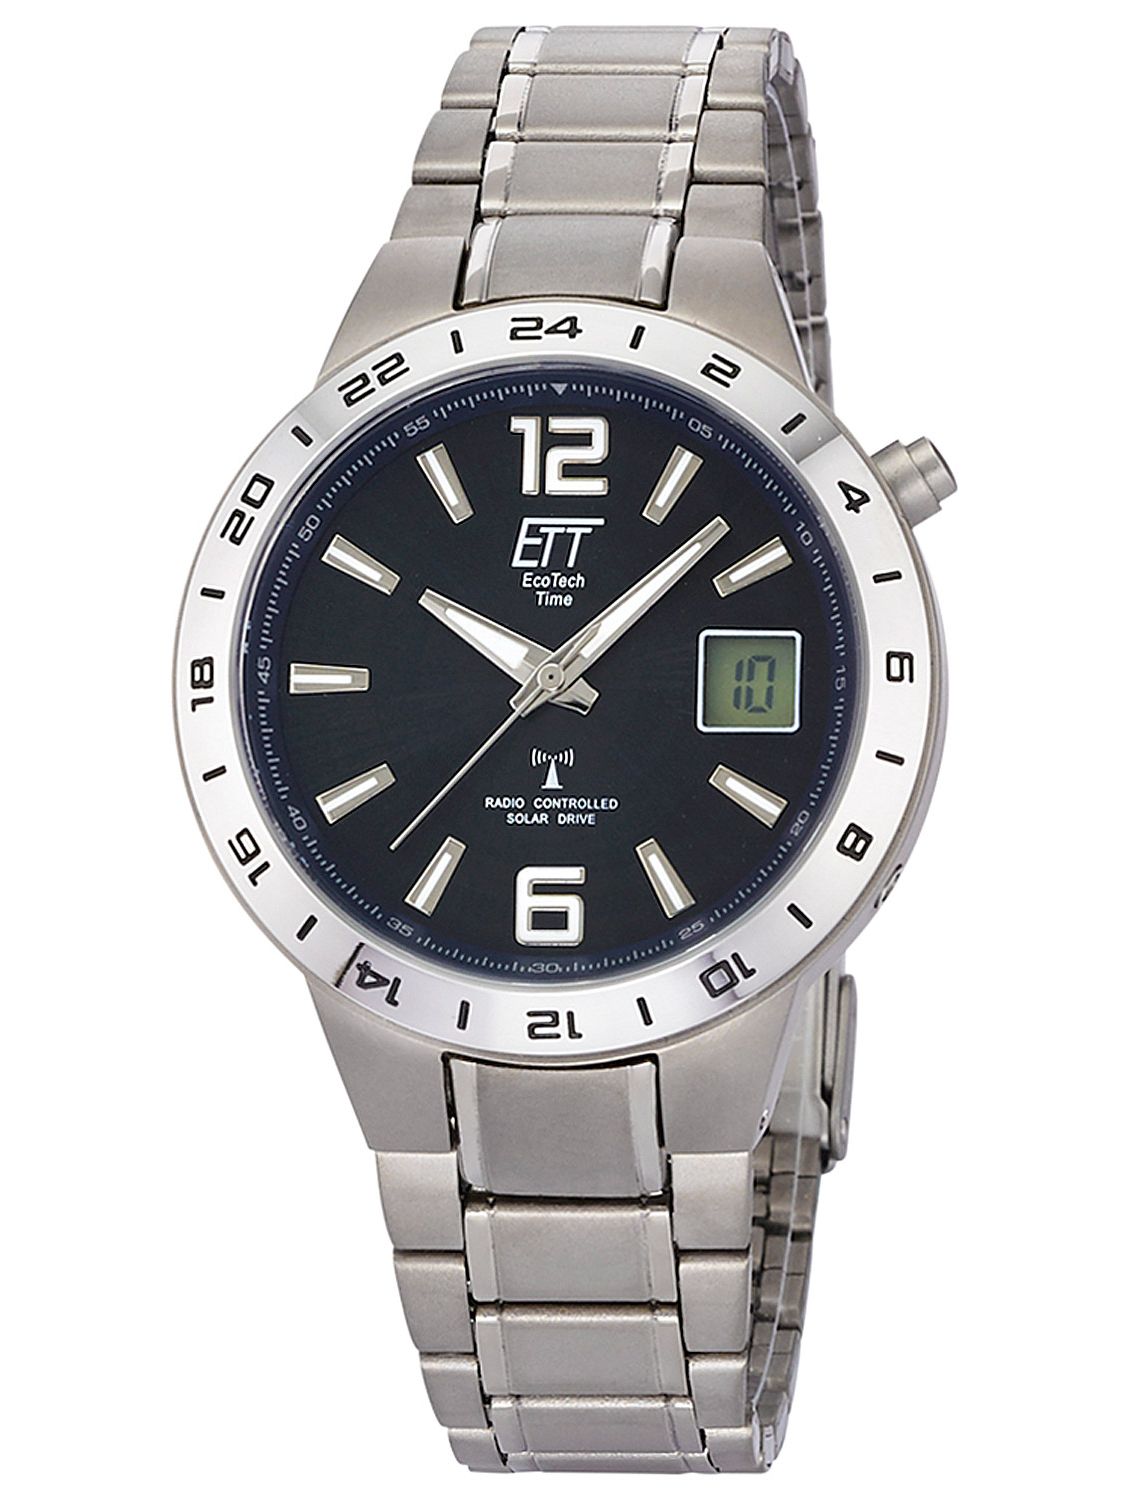 EGT-11411-41M Radio-Controlled Titanium ETT Time Eco Watch uhrcenter Solar • Tech